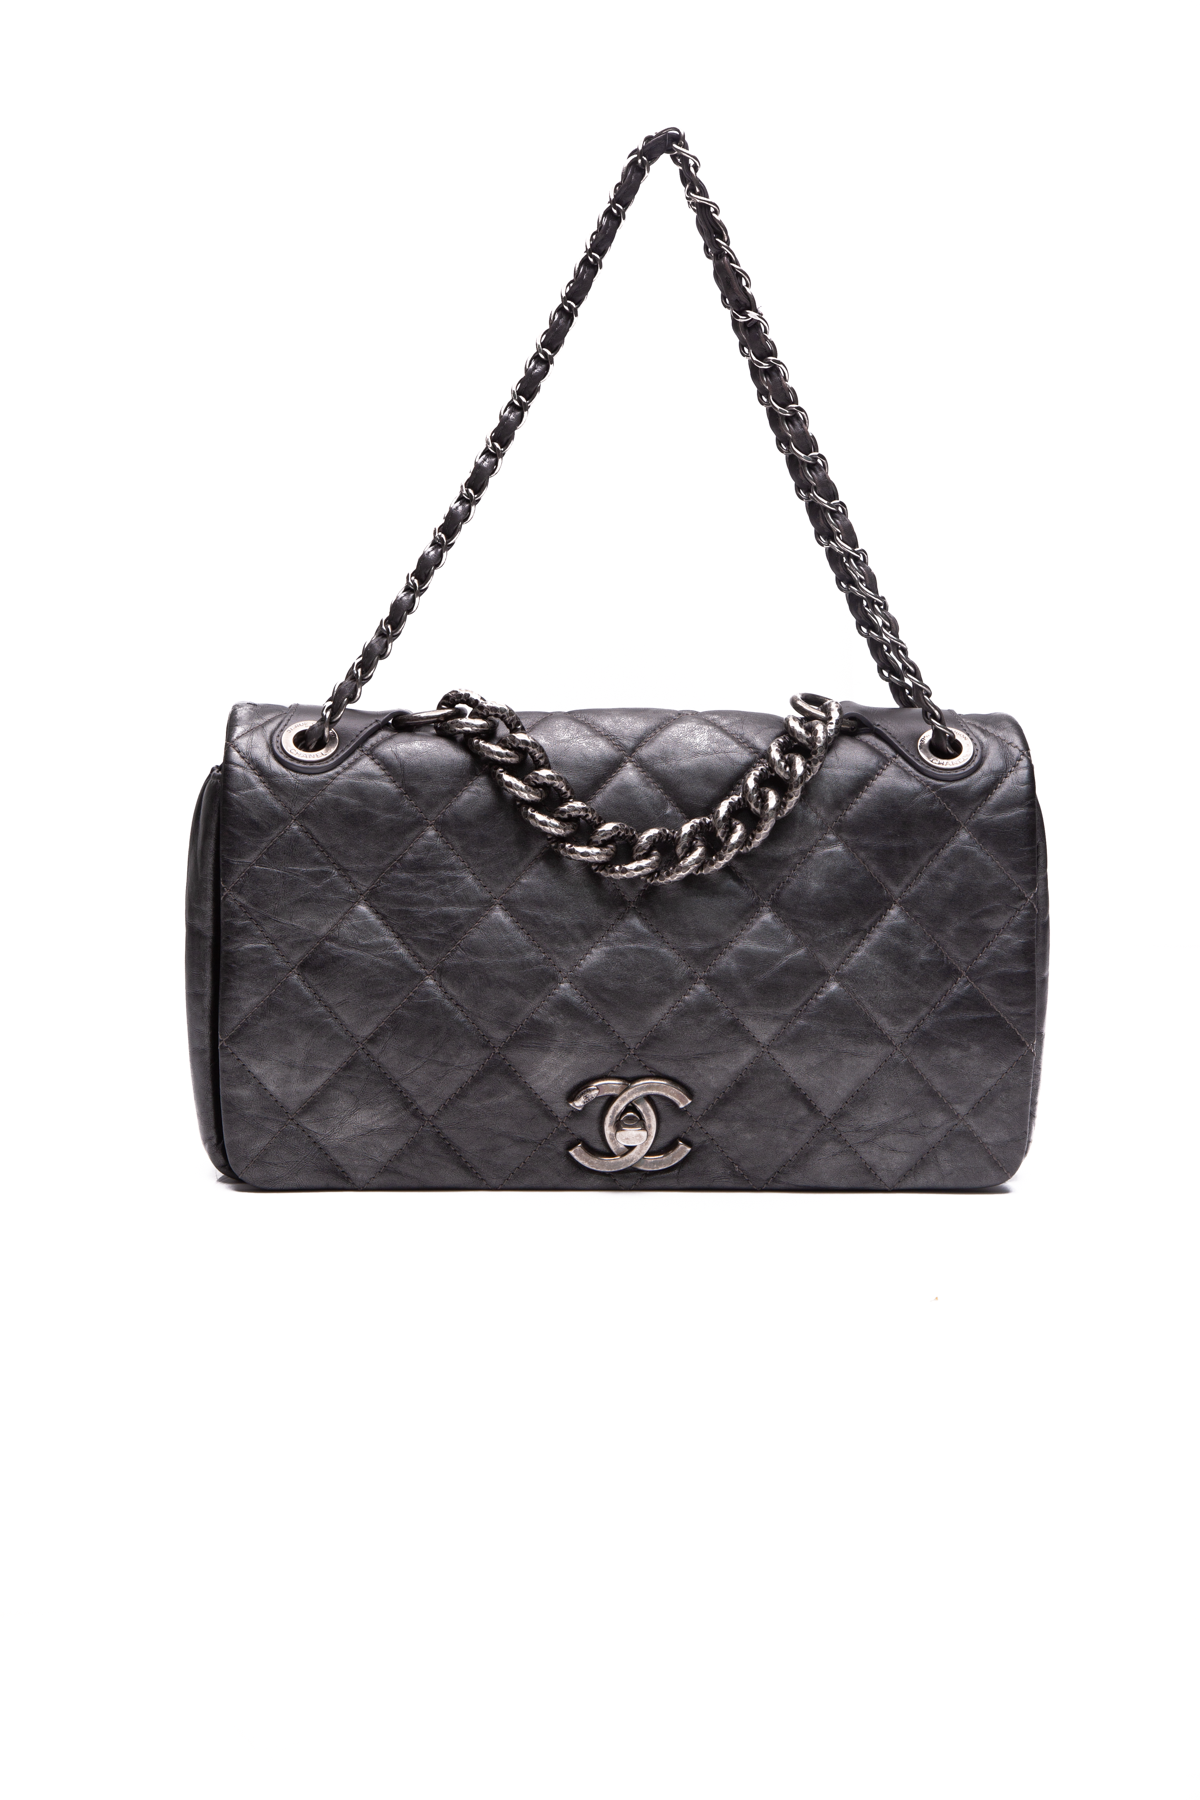 Chanel Jumbo Double Flap Bag - Couture USA